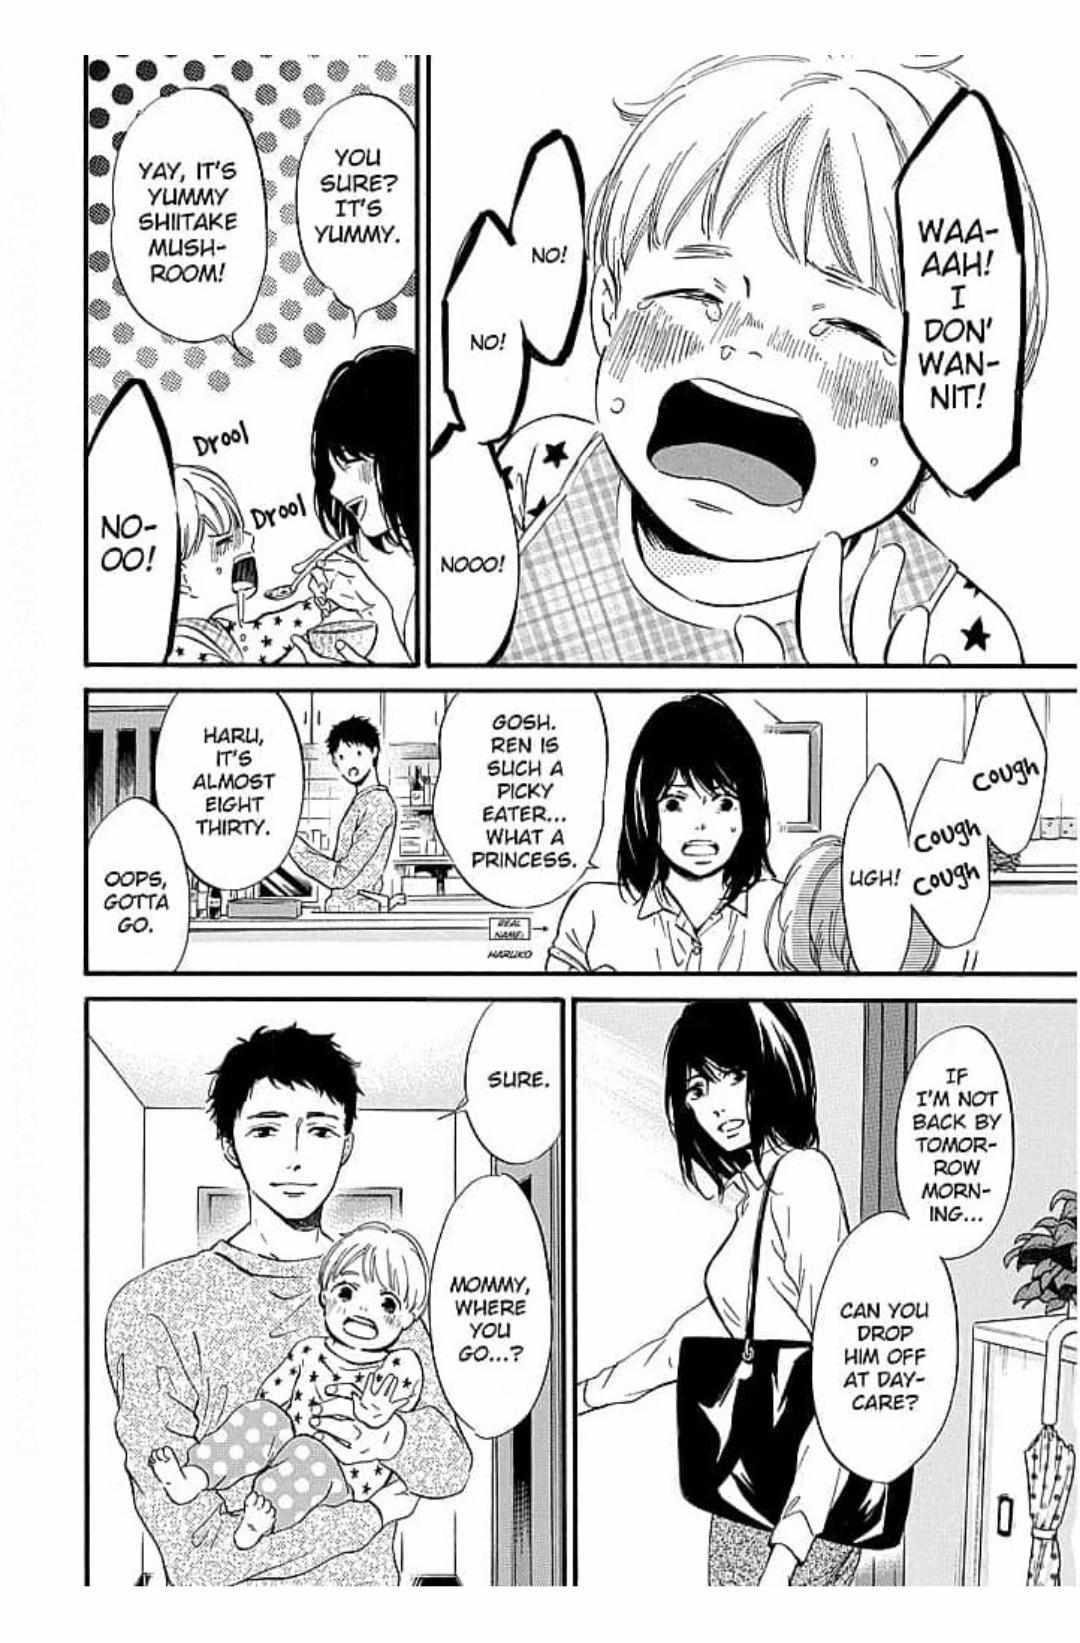 Nishiogikubo Run Through - Page 2